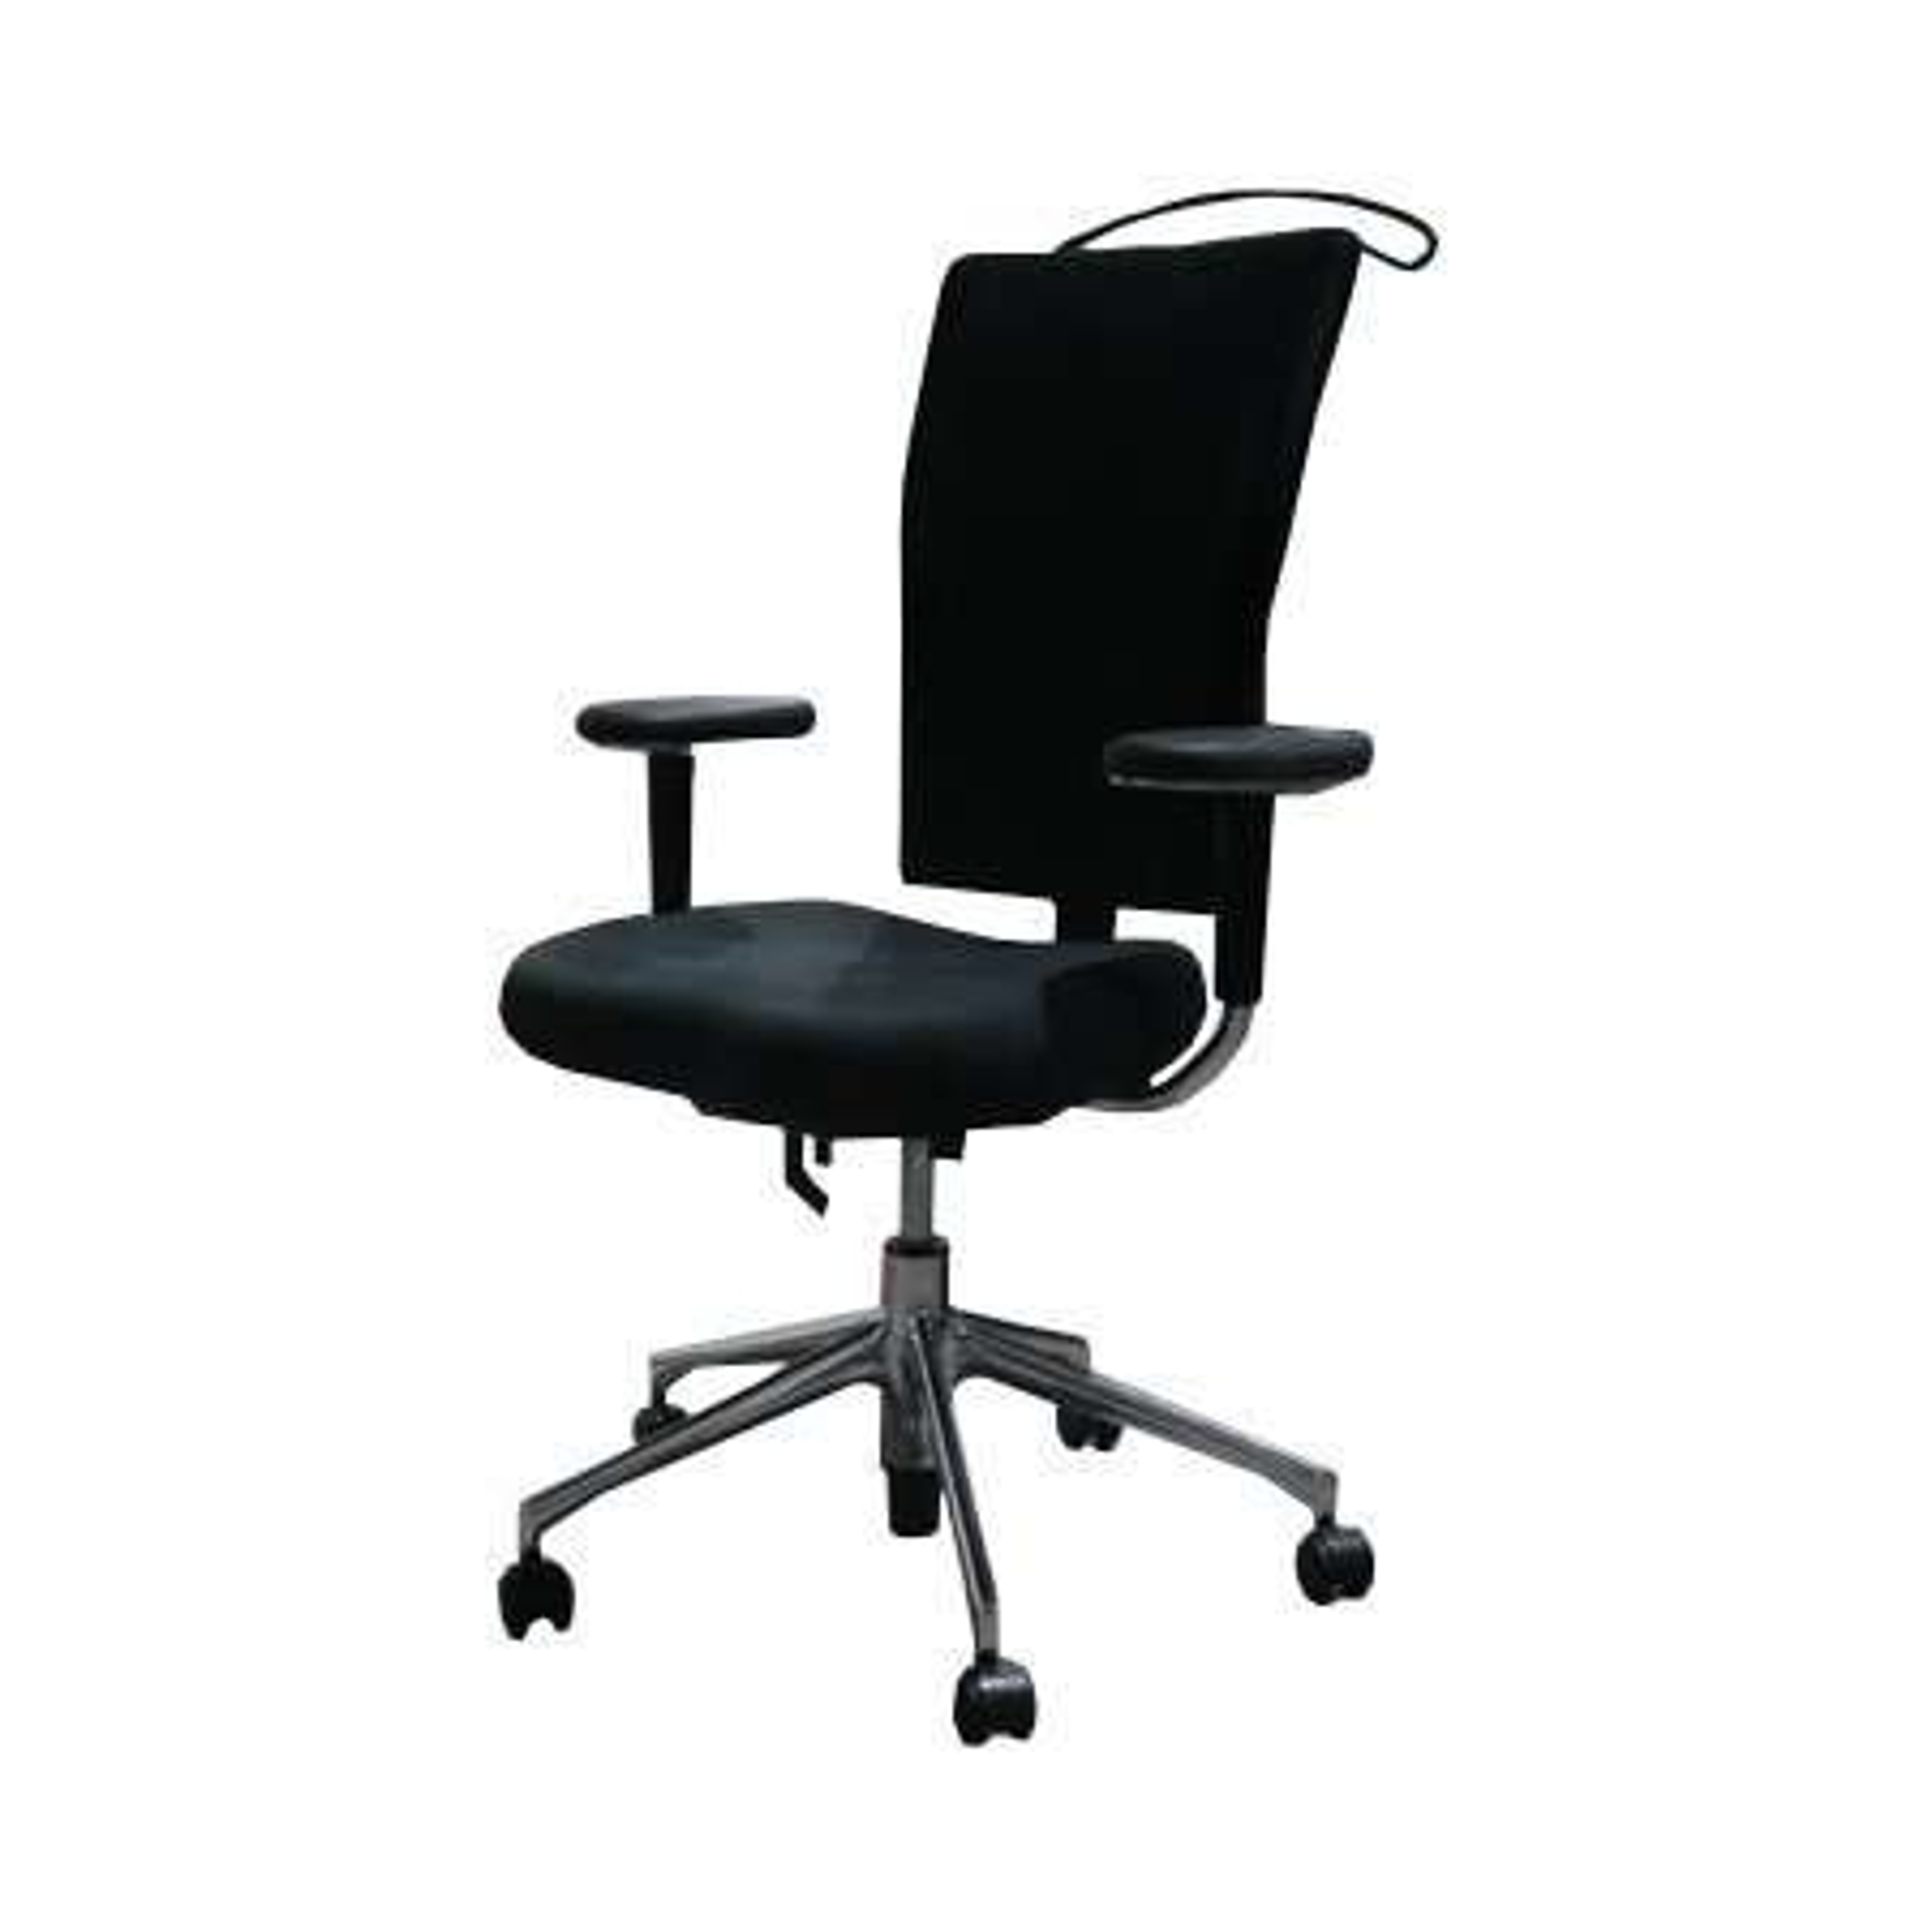 Vitra Bürodrehstuhl "T-Chair" - Stoff in schwarz - Gestell chrom